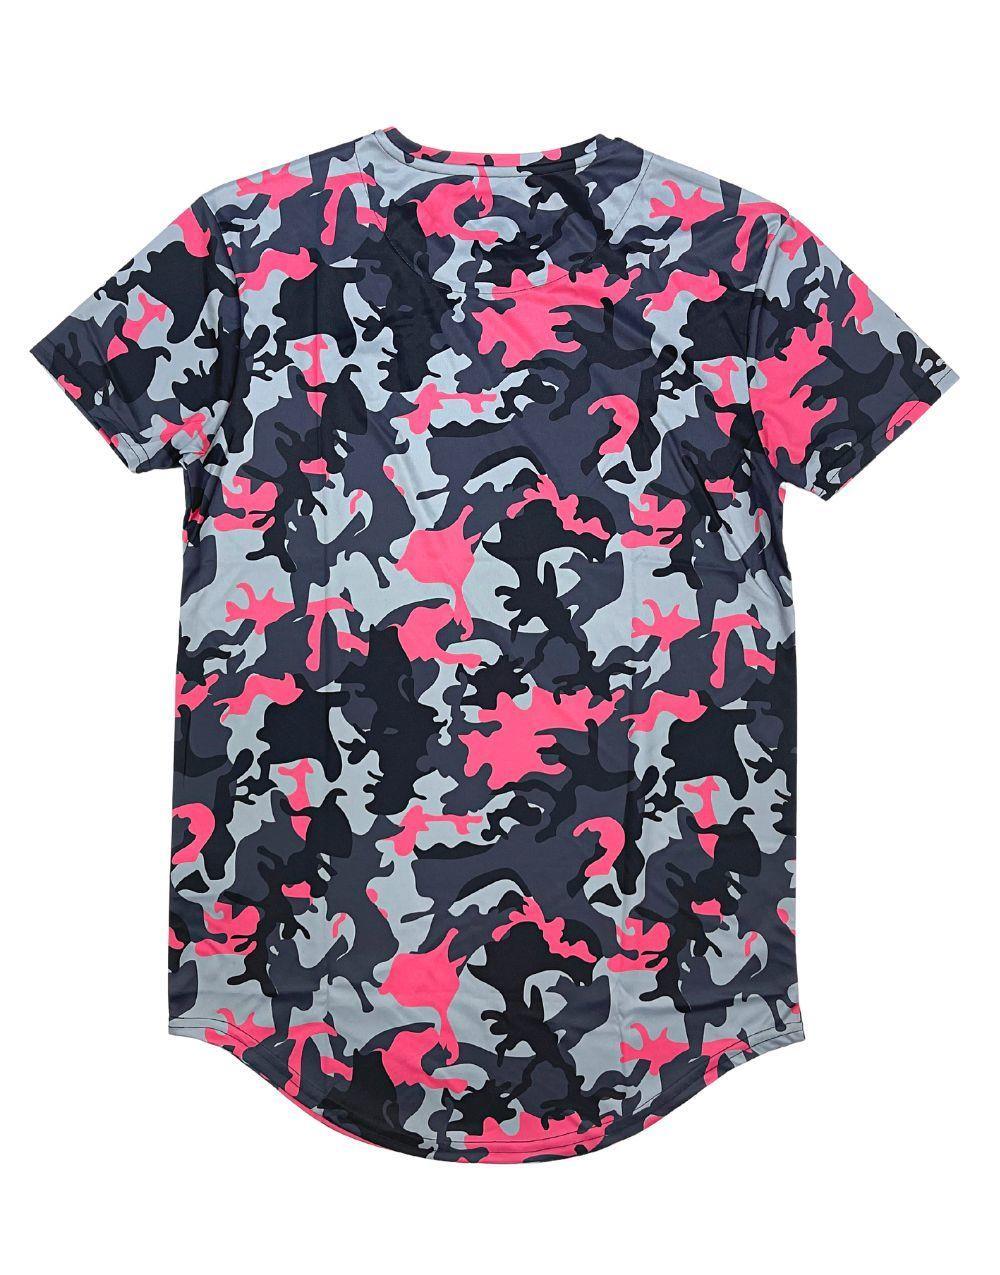 SikSilk Camouflage Slim Fit Men's T-Shirt - STREET MODE ™